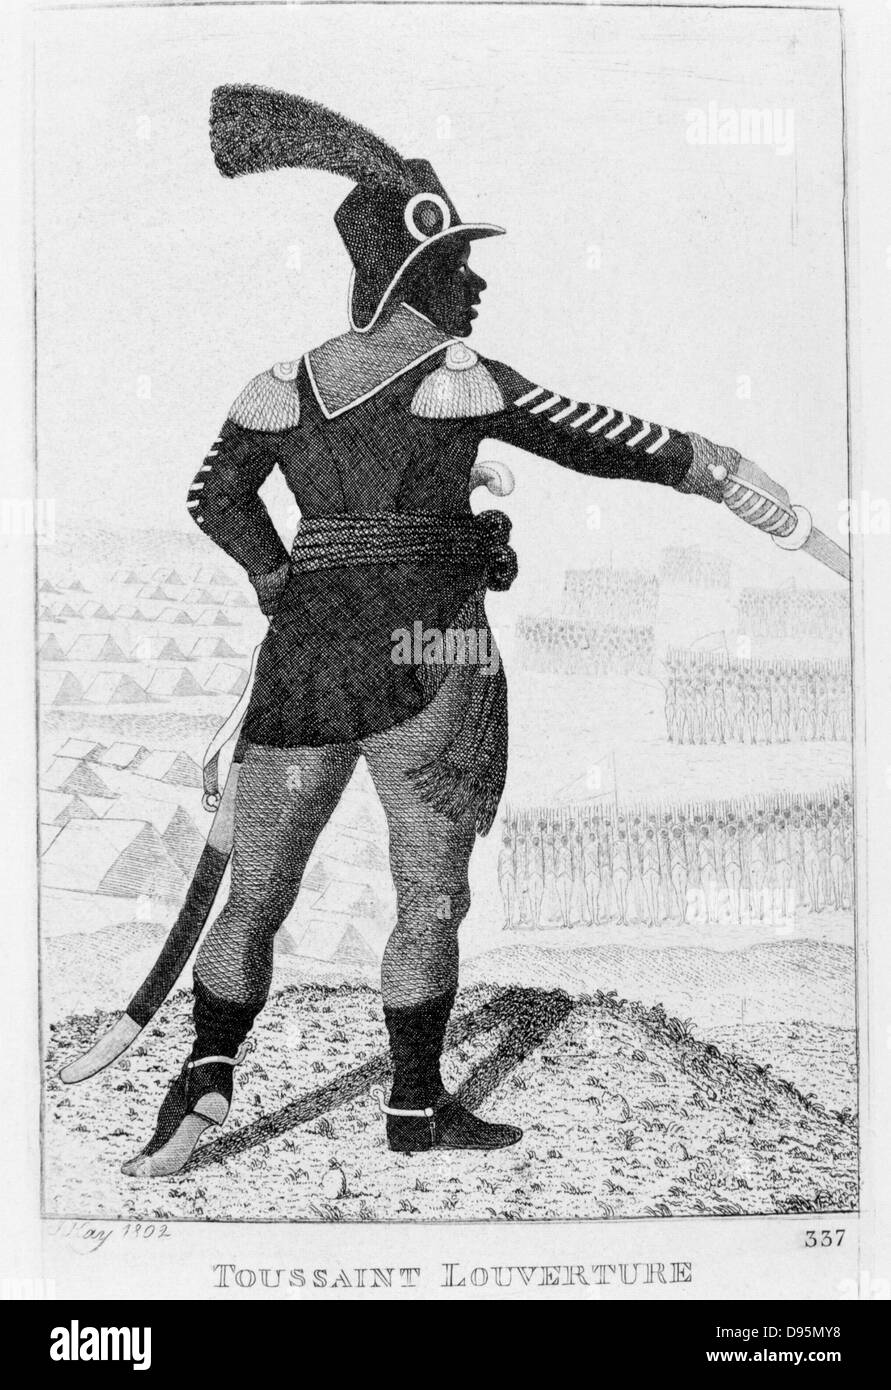 Pierre Dominique Toussaint L'Ouverture (1746-1803), líder revolucionario haitiano. Grabado por John Kay, 1802. Foto de stock